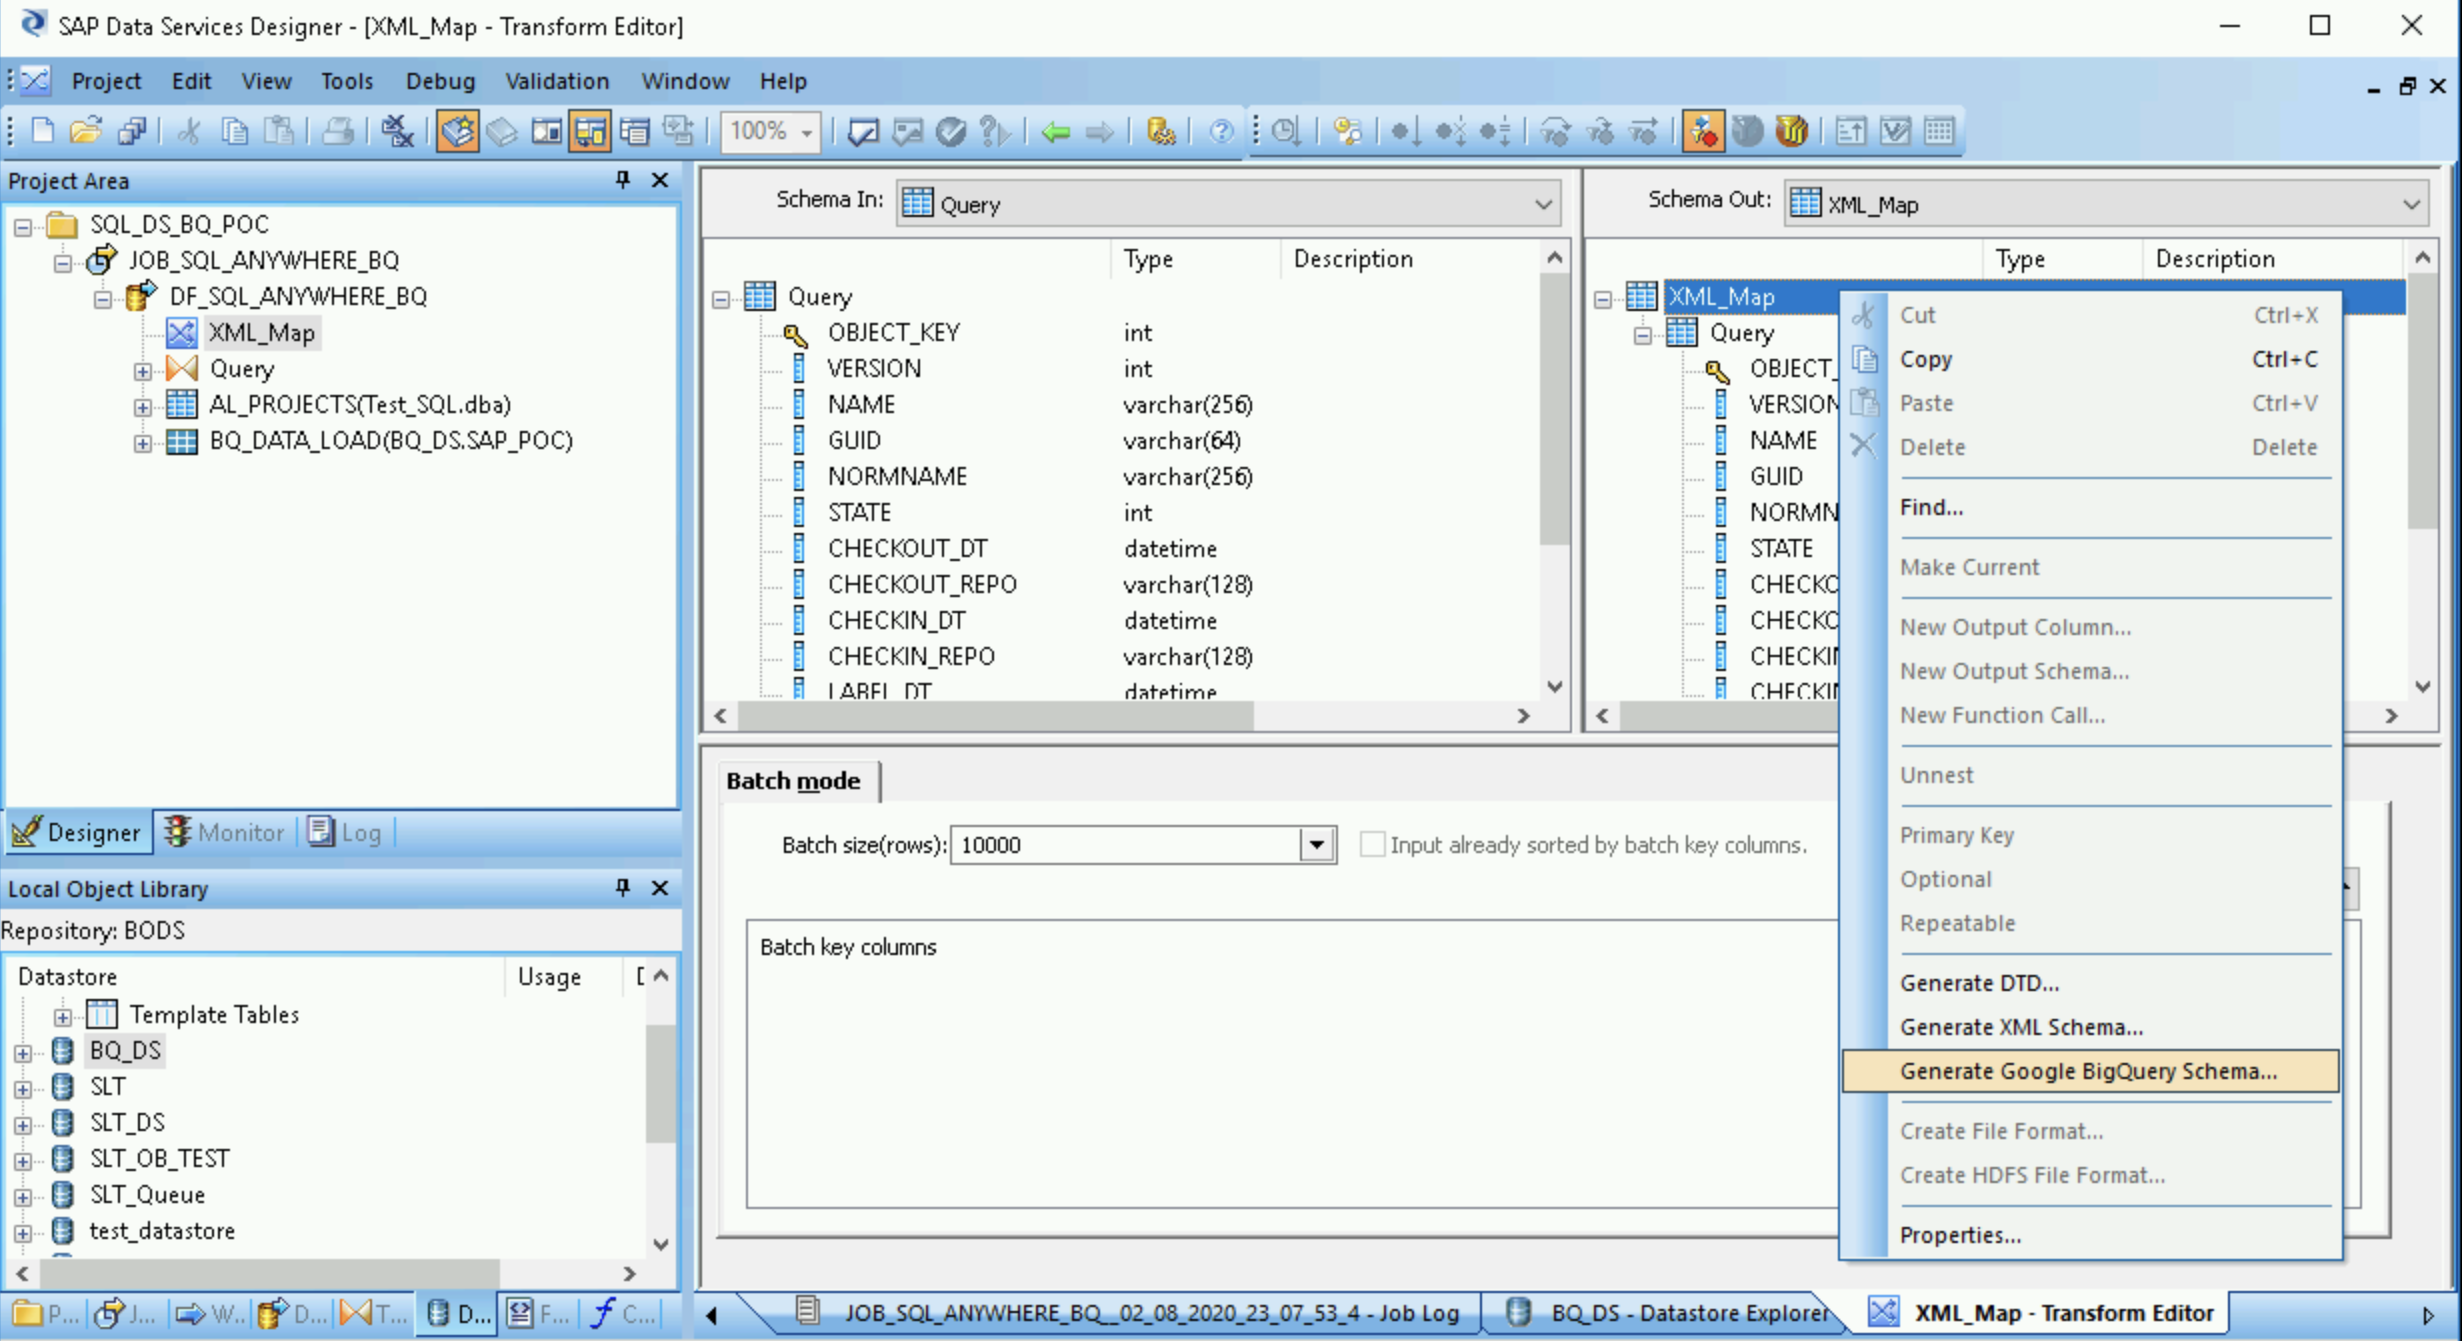 Captura de pantalla de SAP Data Services Designer en la que se muestra el menú desplegable para generar un esquema de Google BigQuery